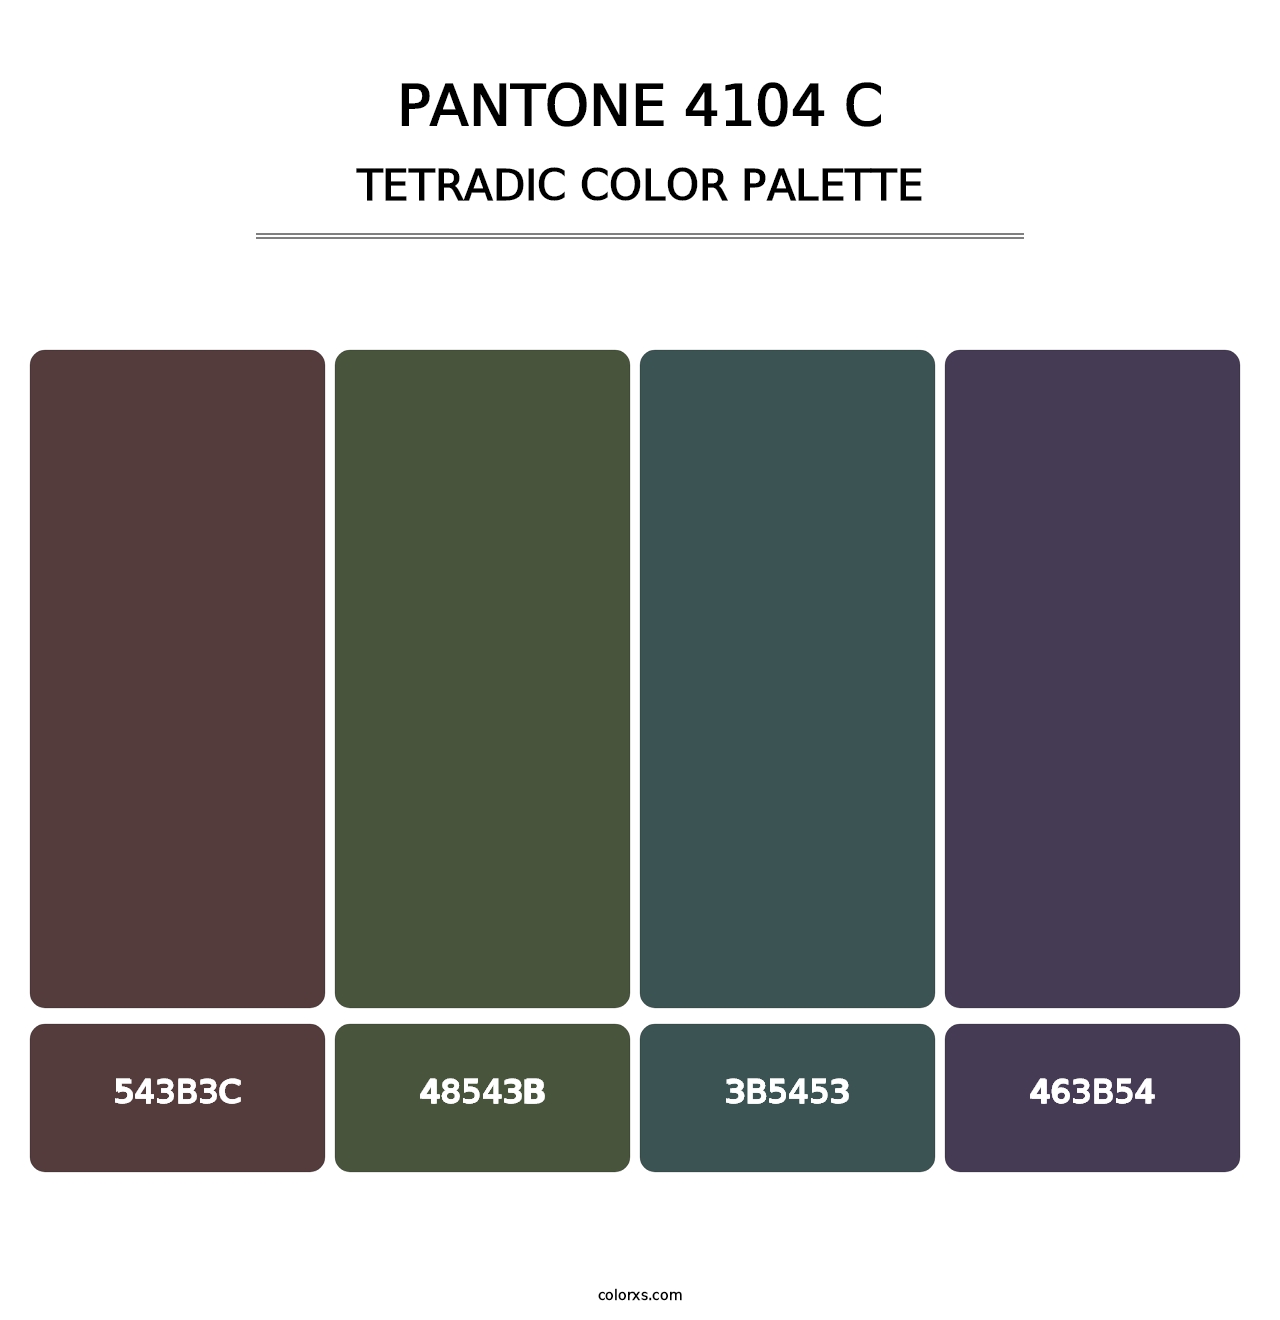 PANTONE 4104 C - Tetradic Color Palette